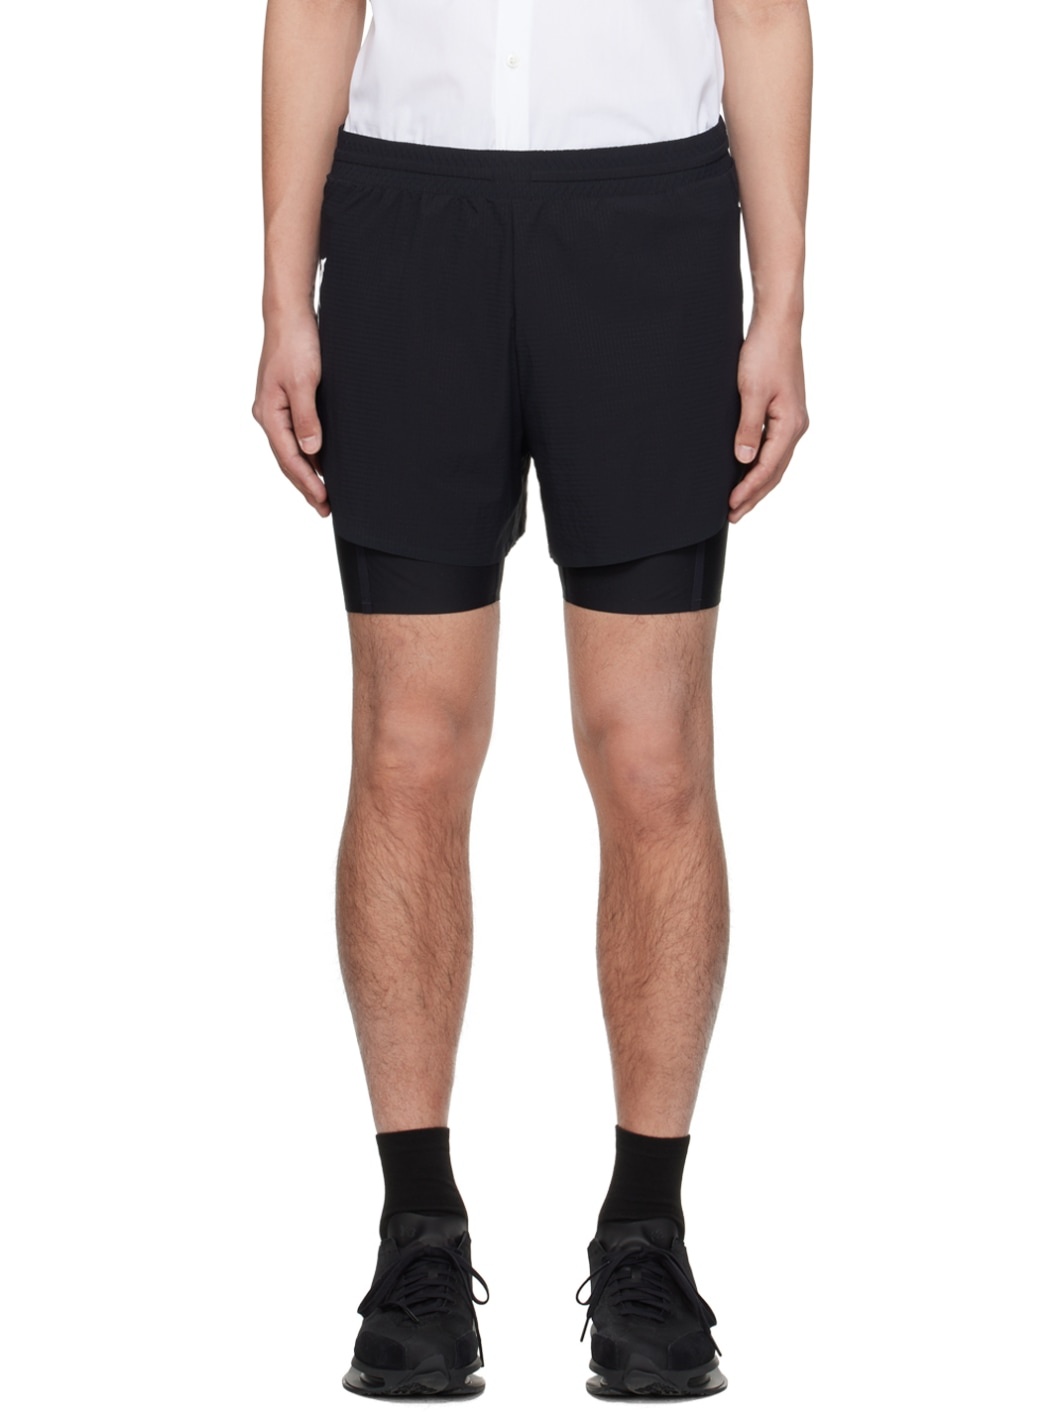 Black Layered Shorts - 1